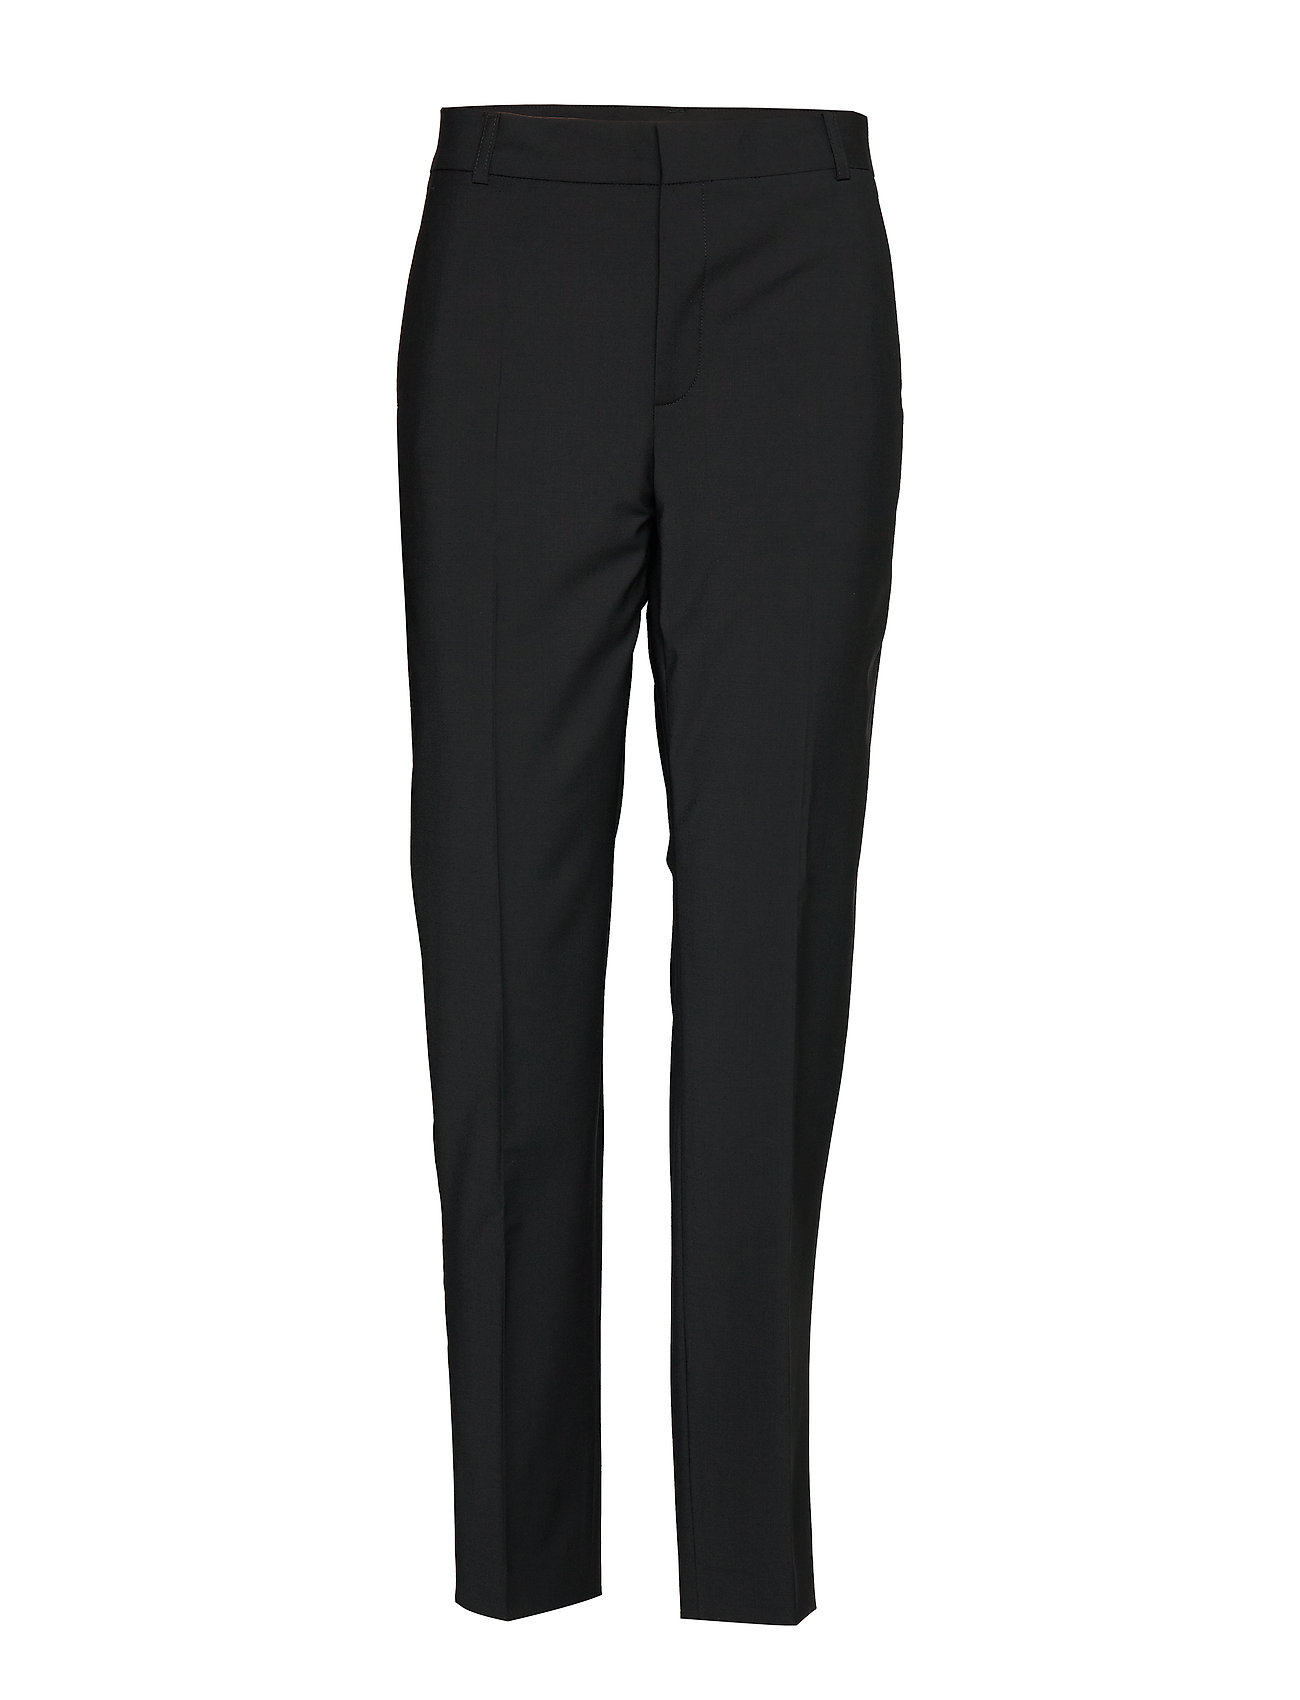 InWear ZALA CIGARETTE PANT - Trousers - black - Zalando.co.uk